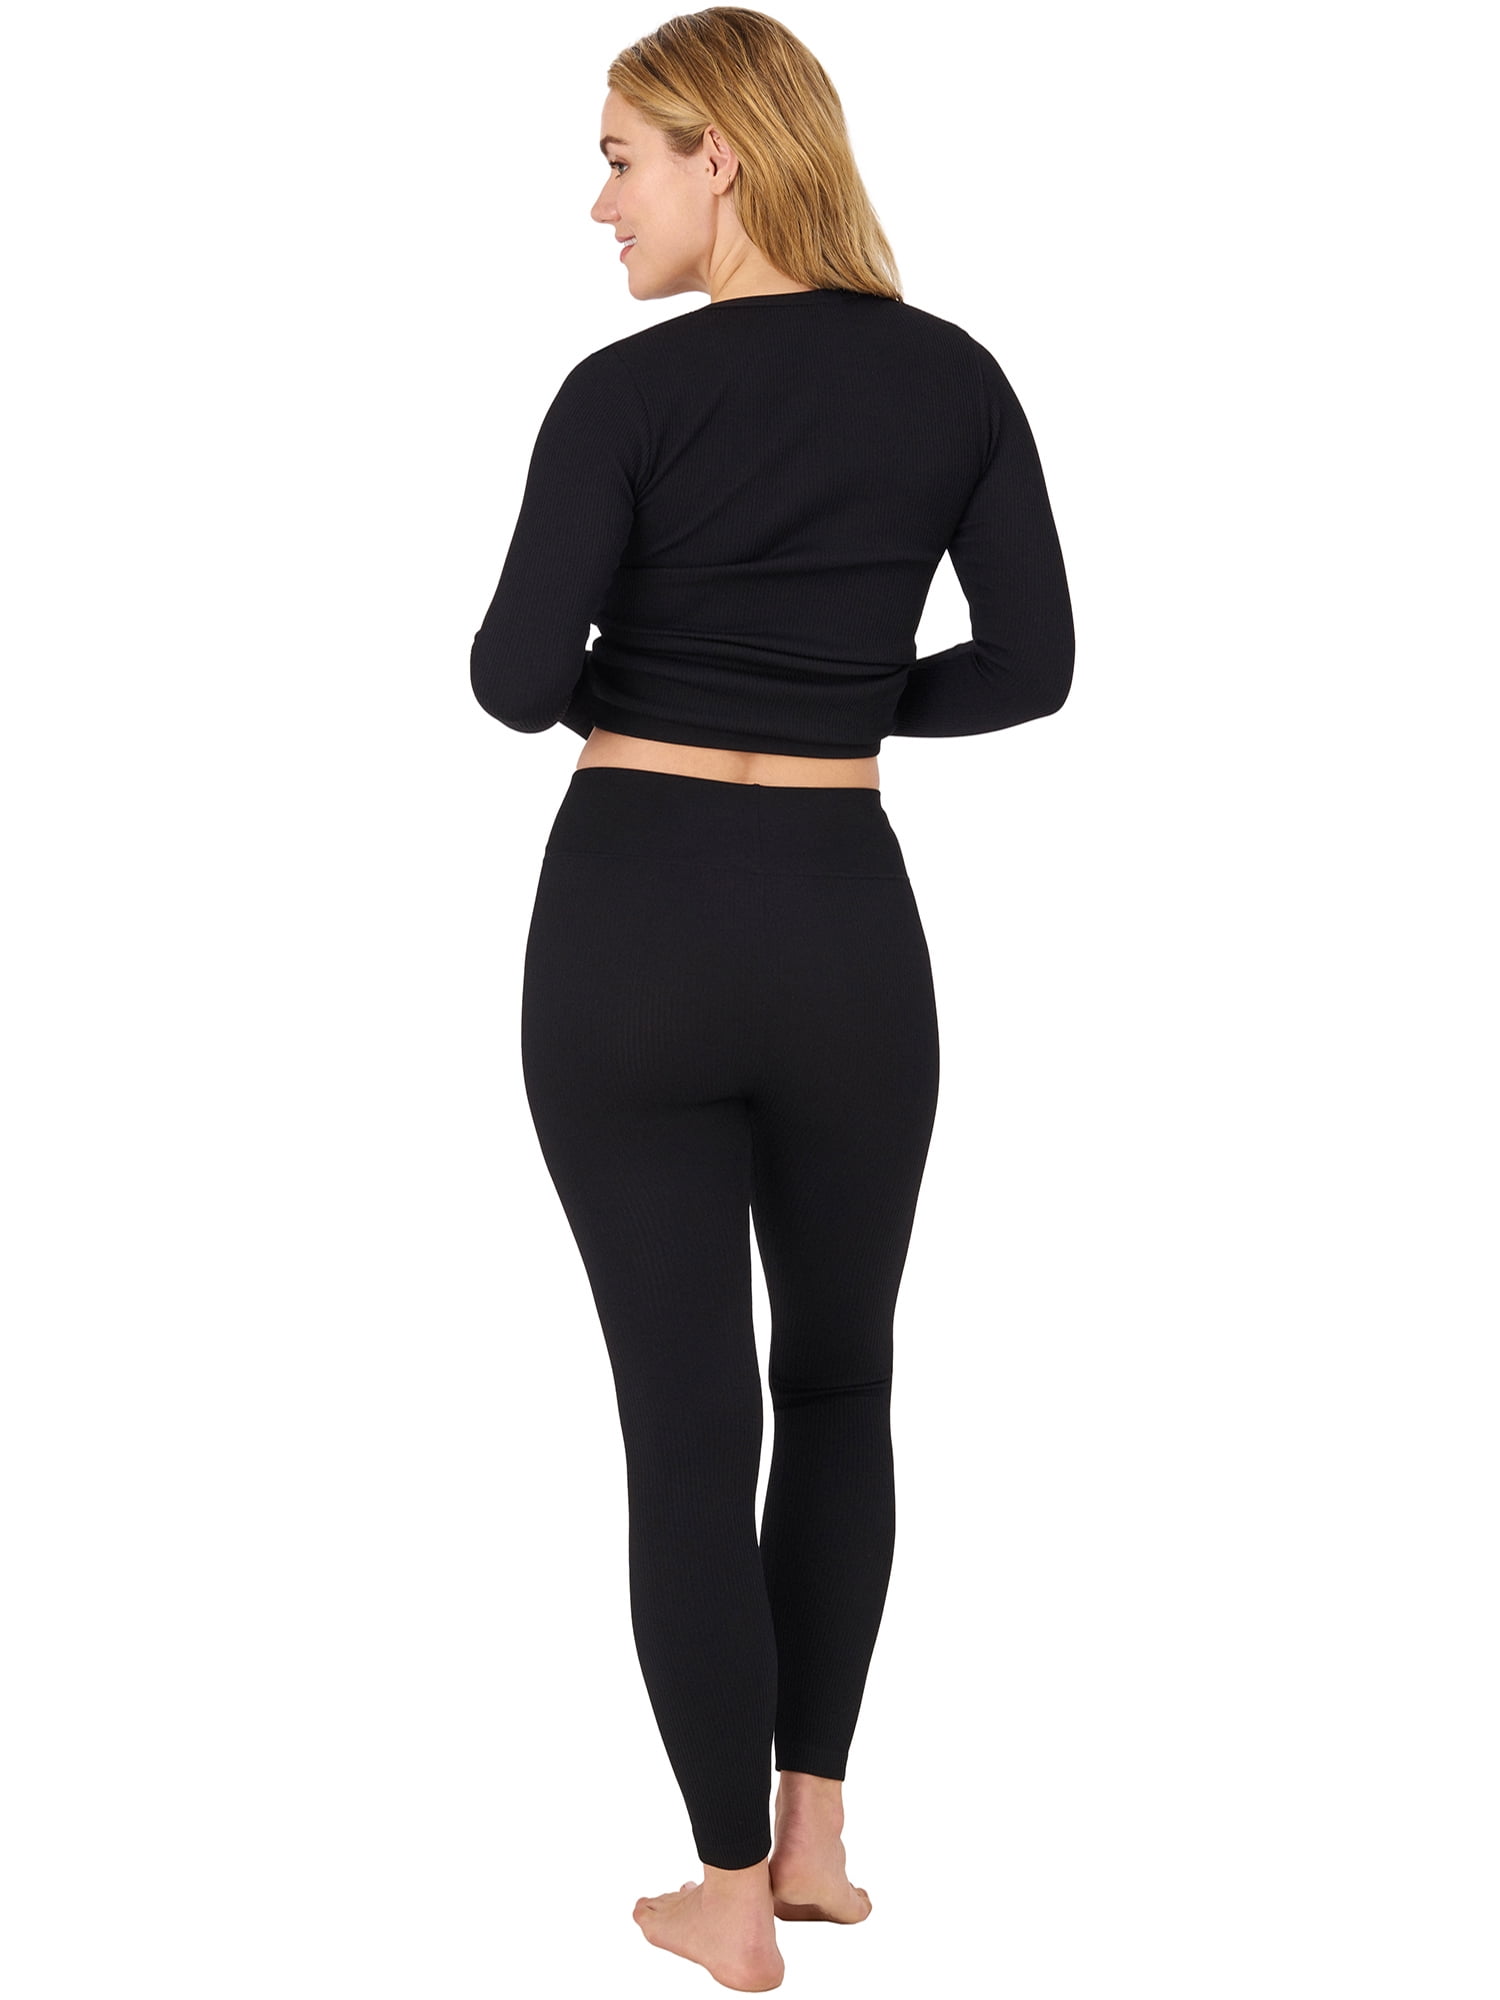 Plus size thermal leggings in black, 4.99€